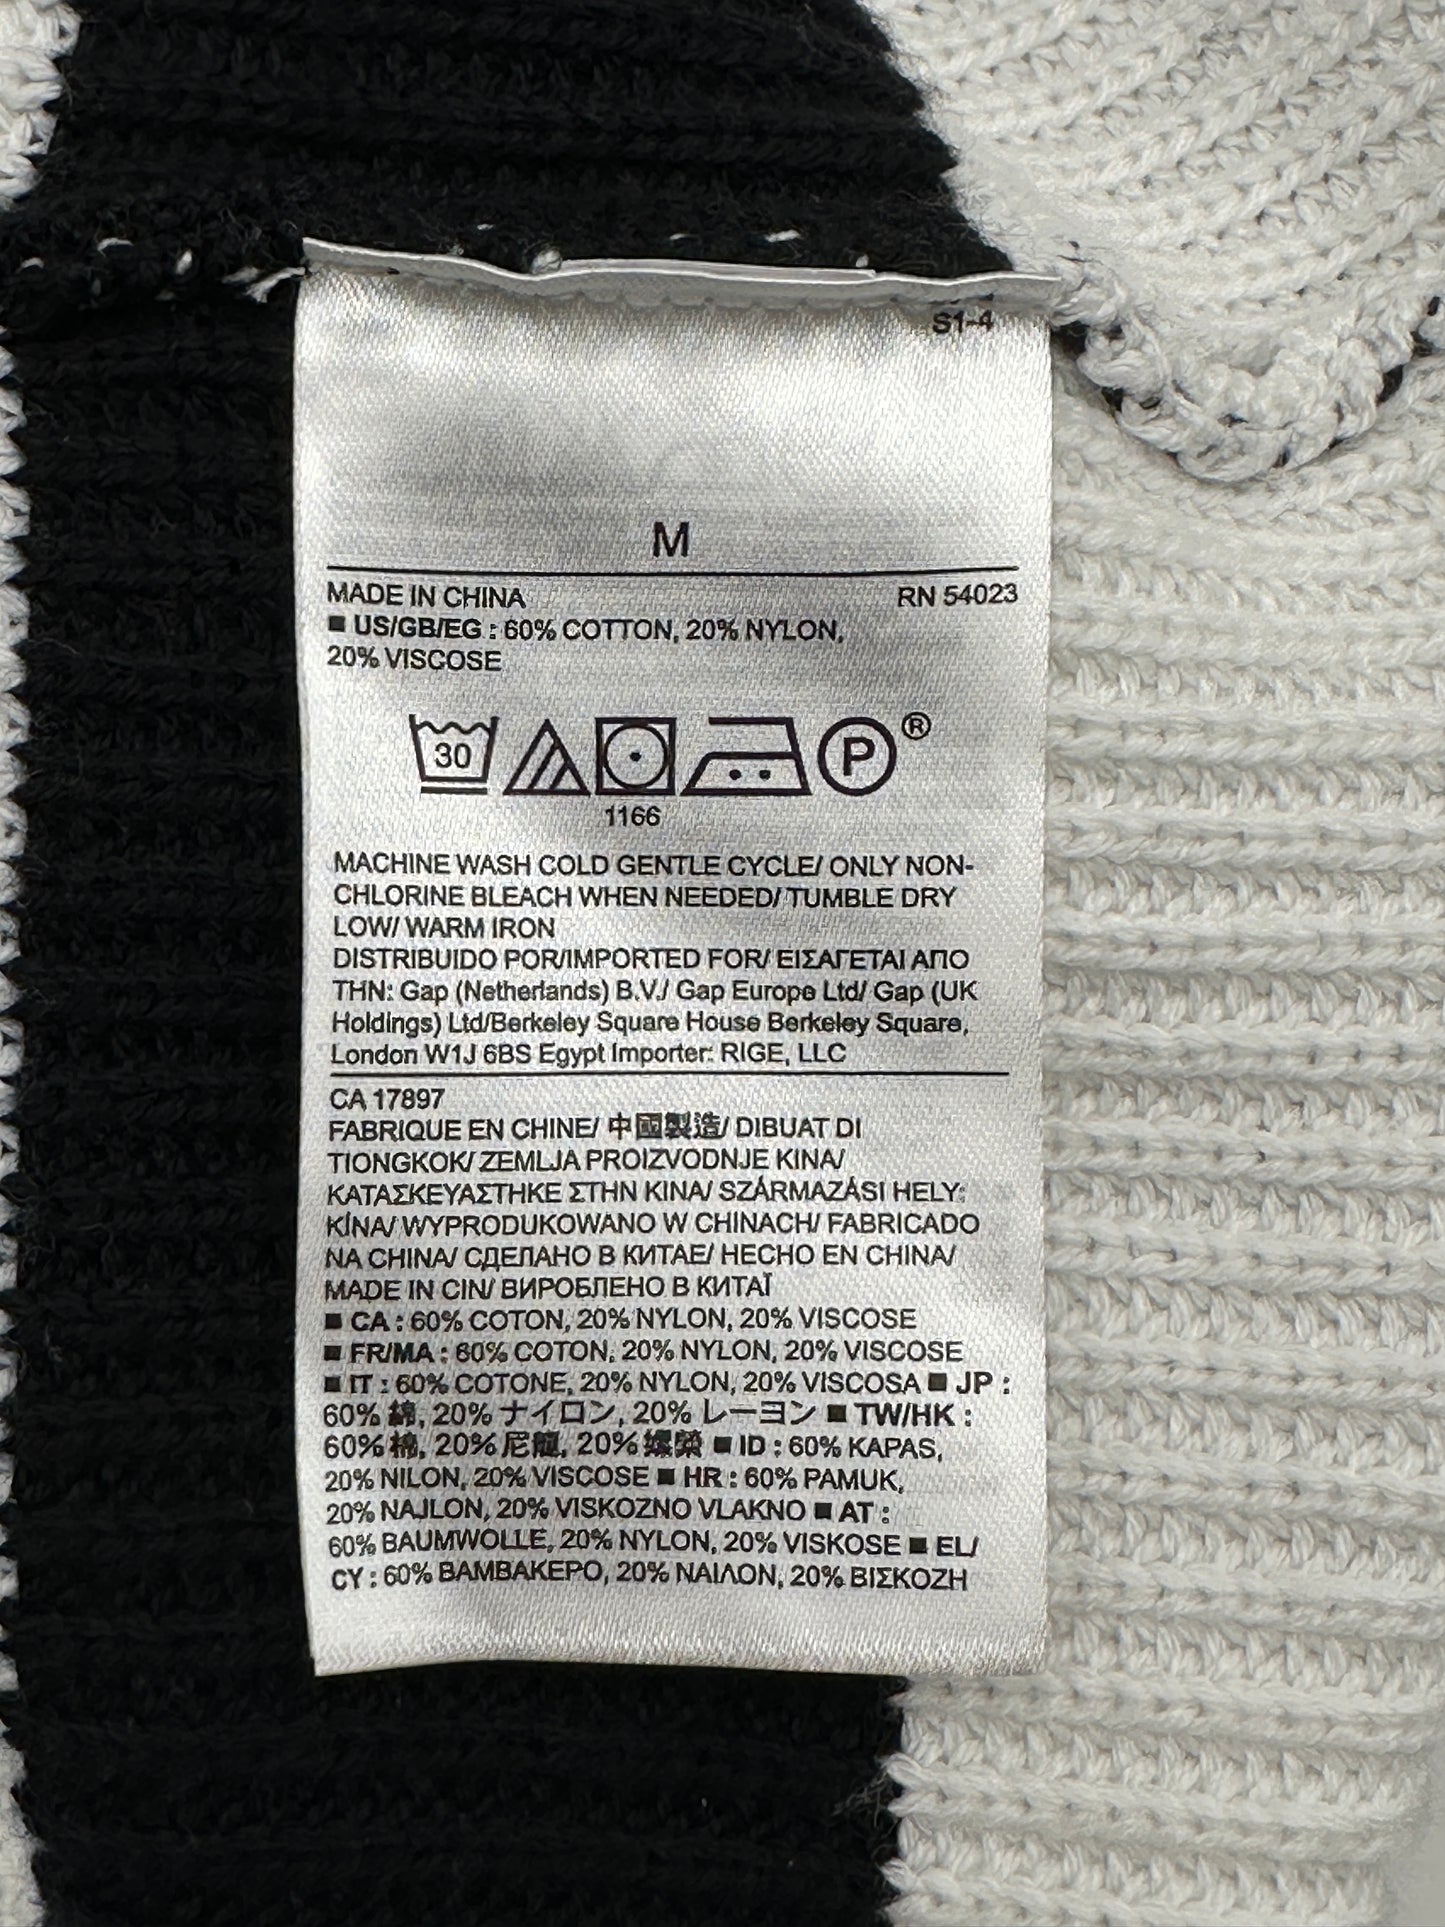 Banana Republic Size M Black & White Striped Short Sleeve Open-Back Sweater